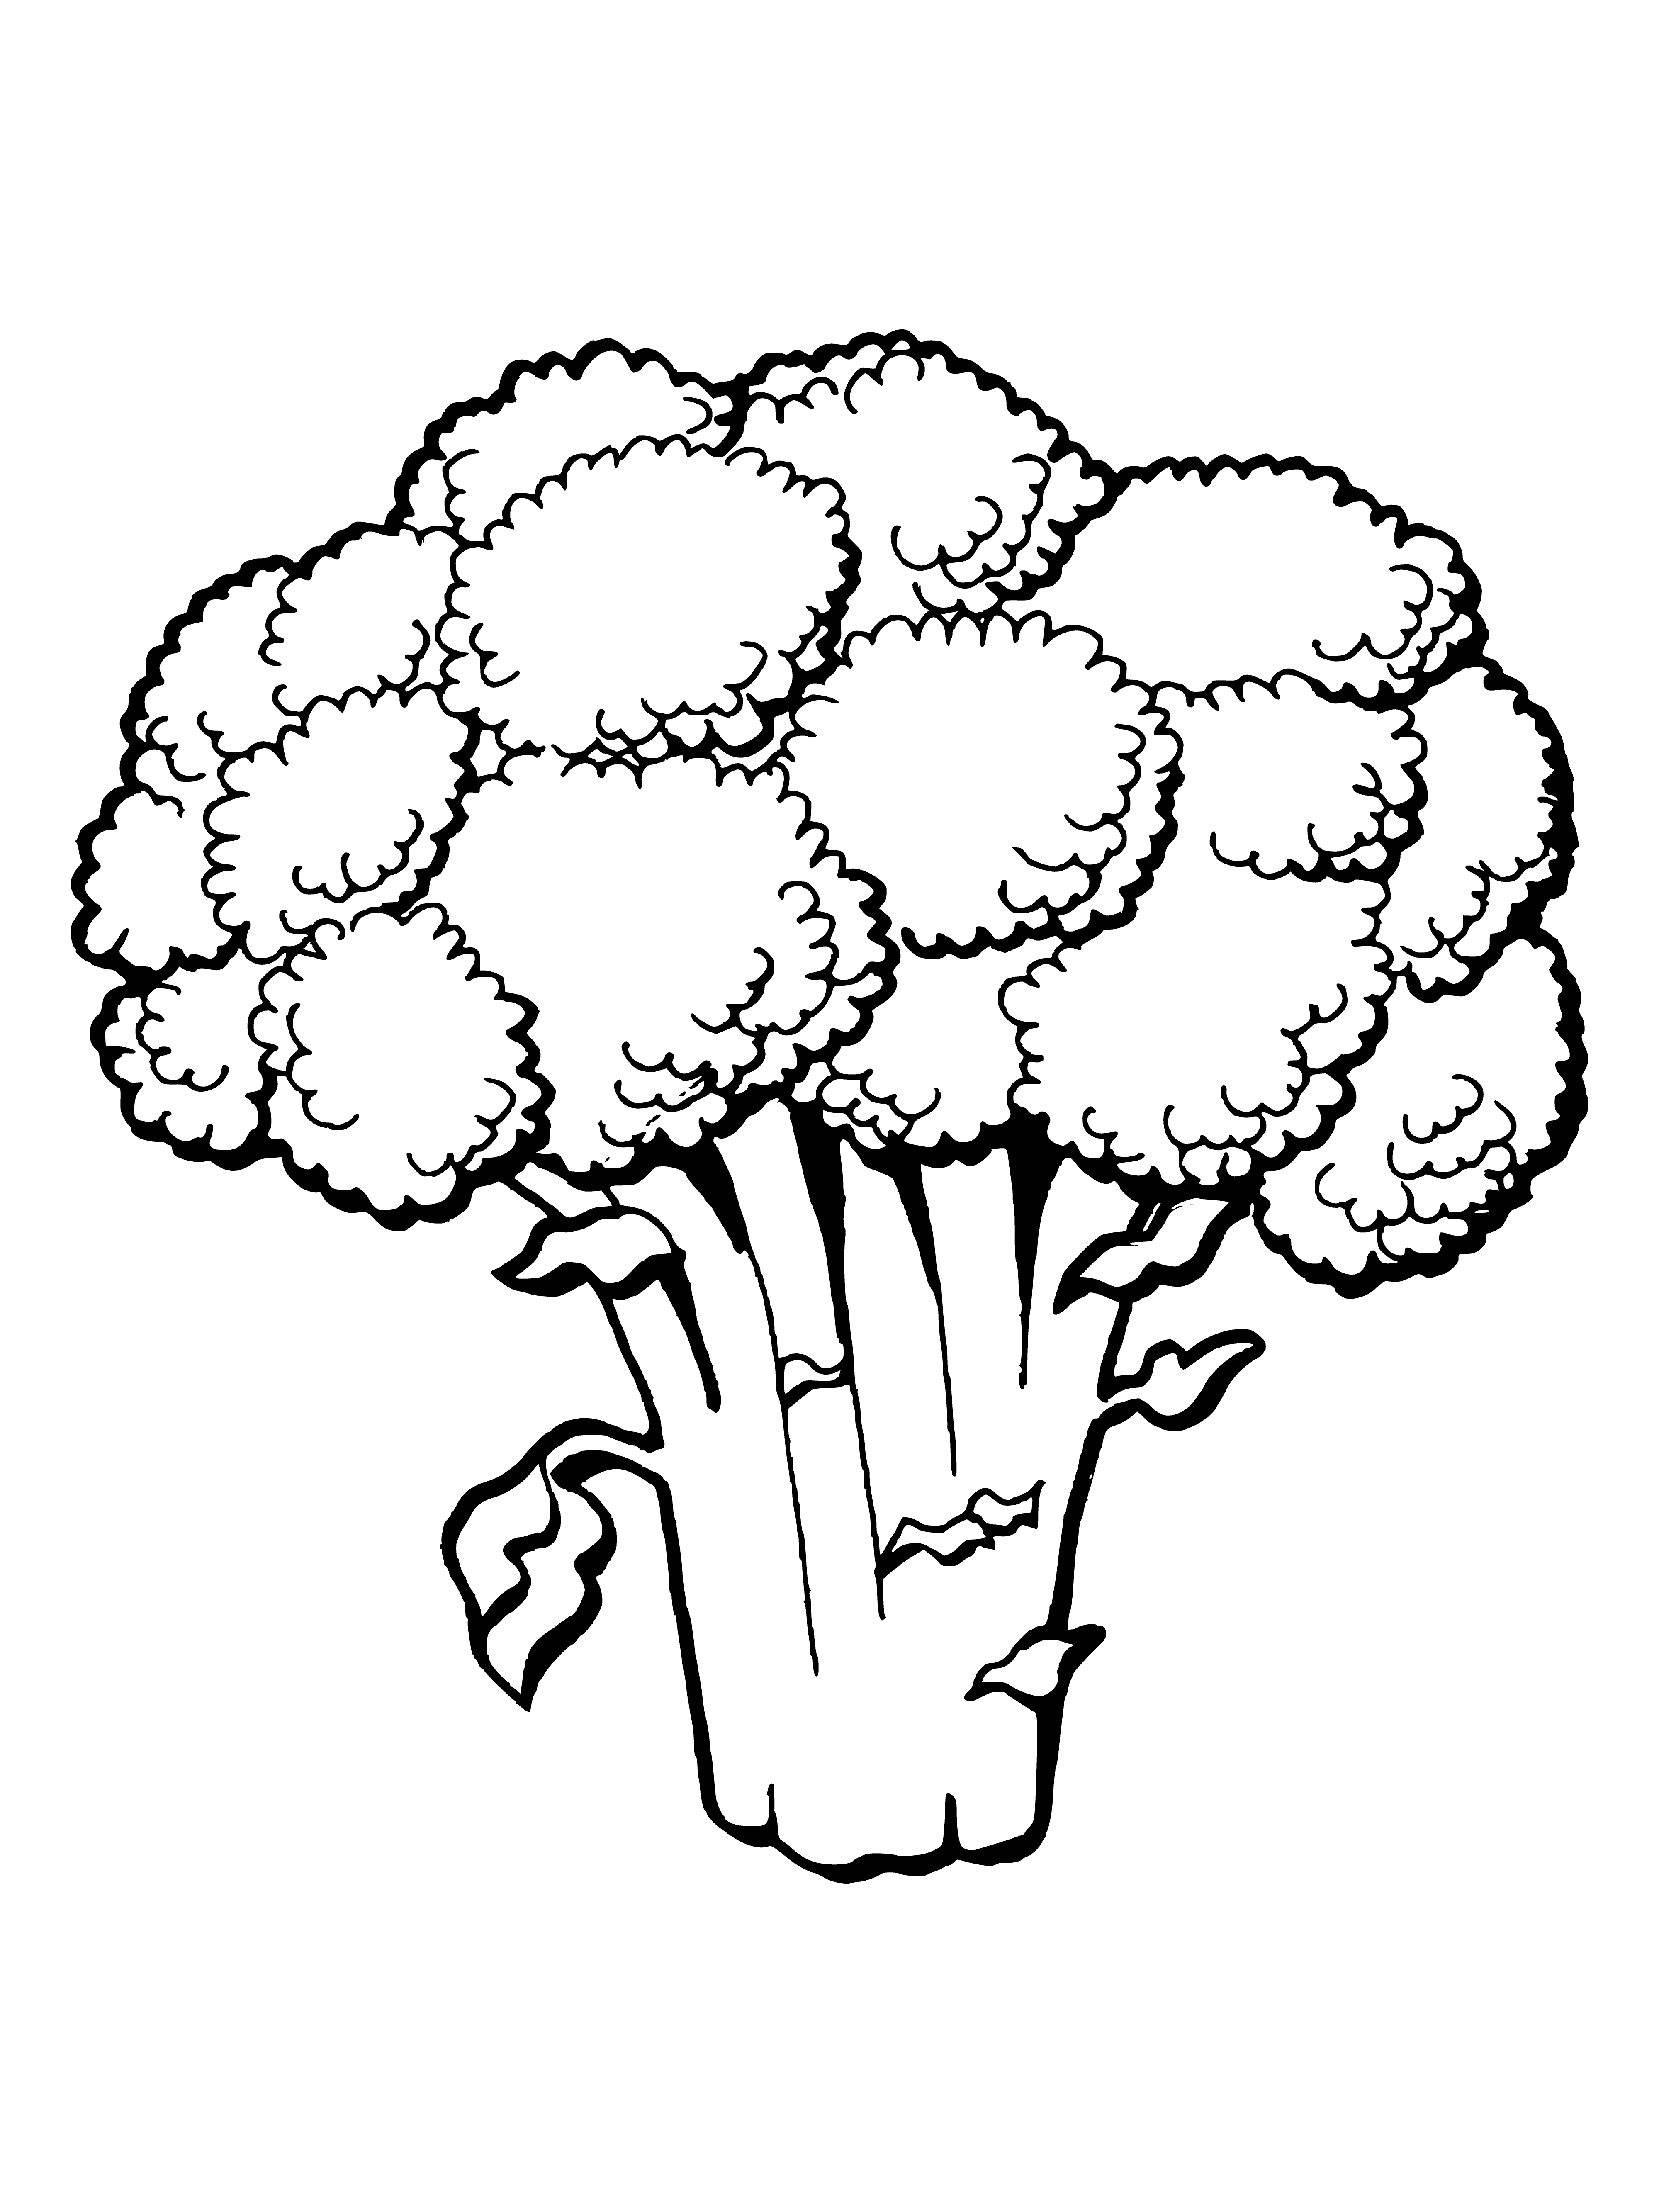 Broccoli coloring page